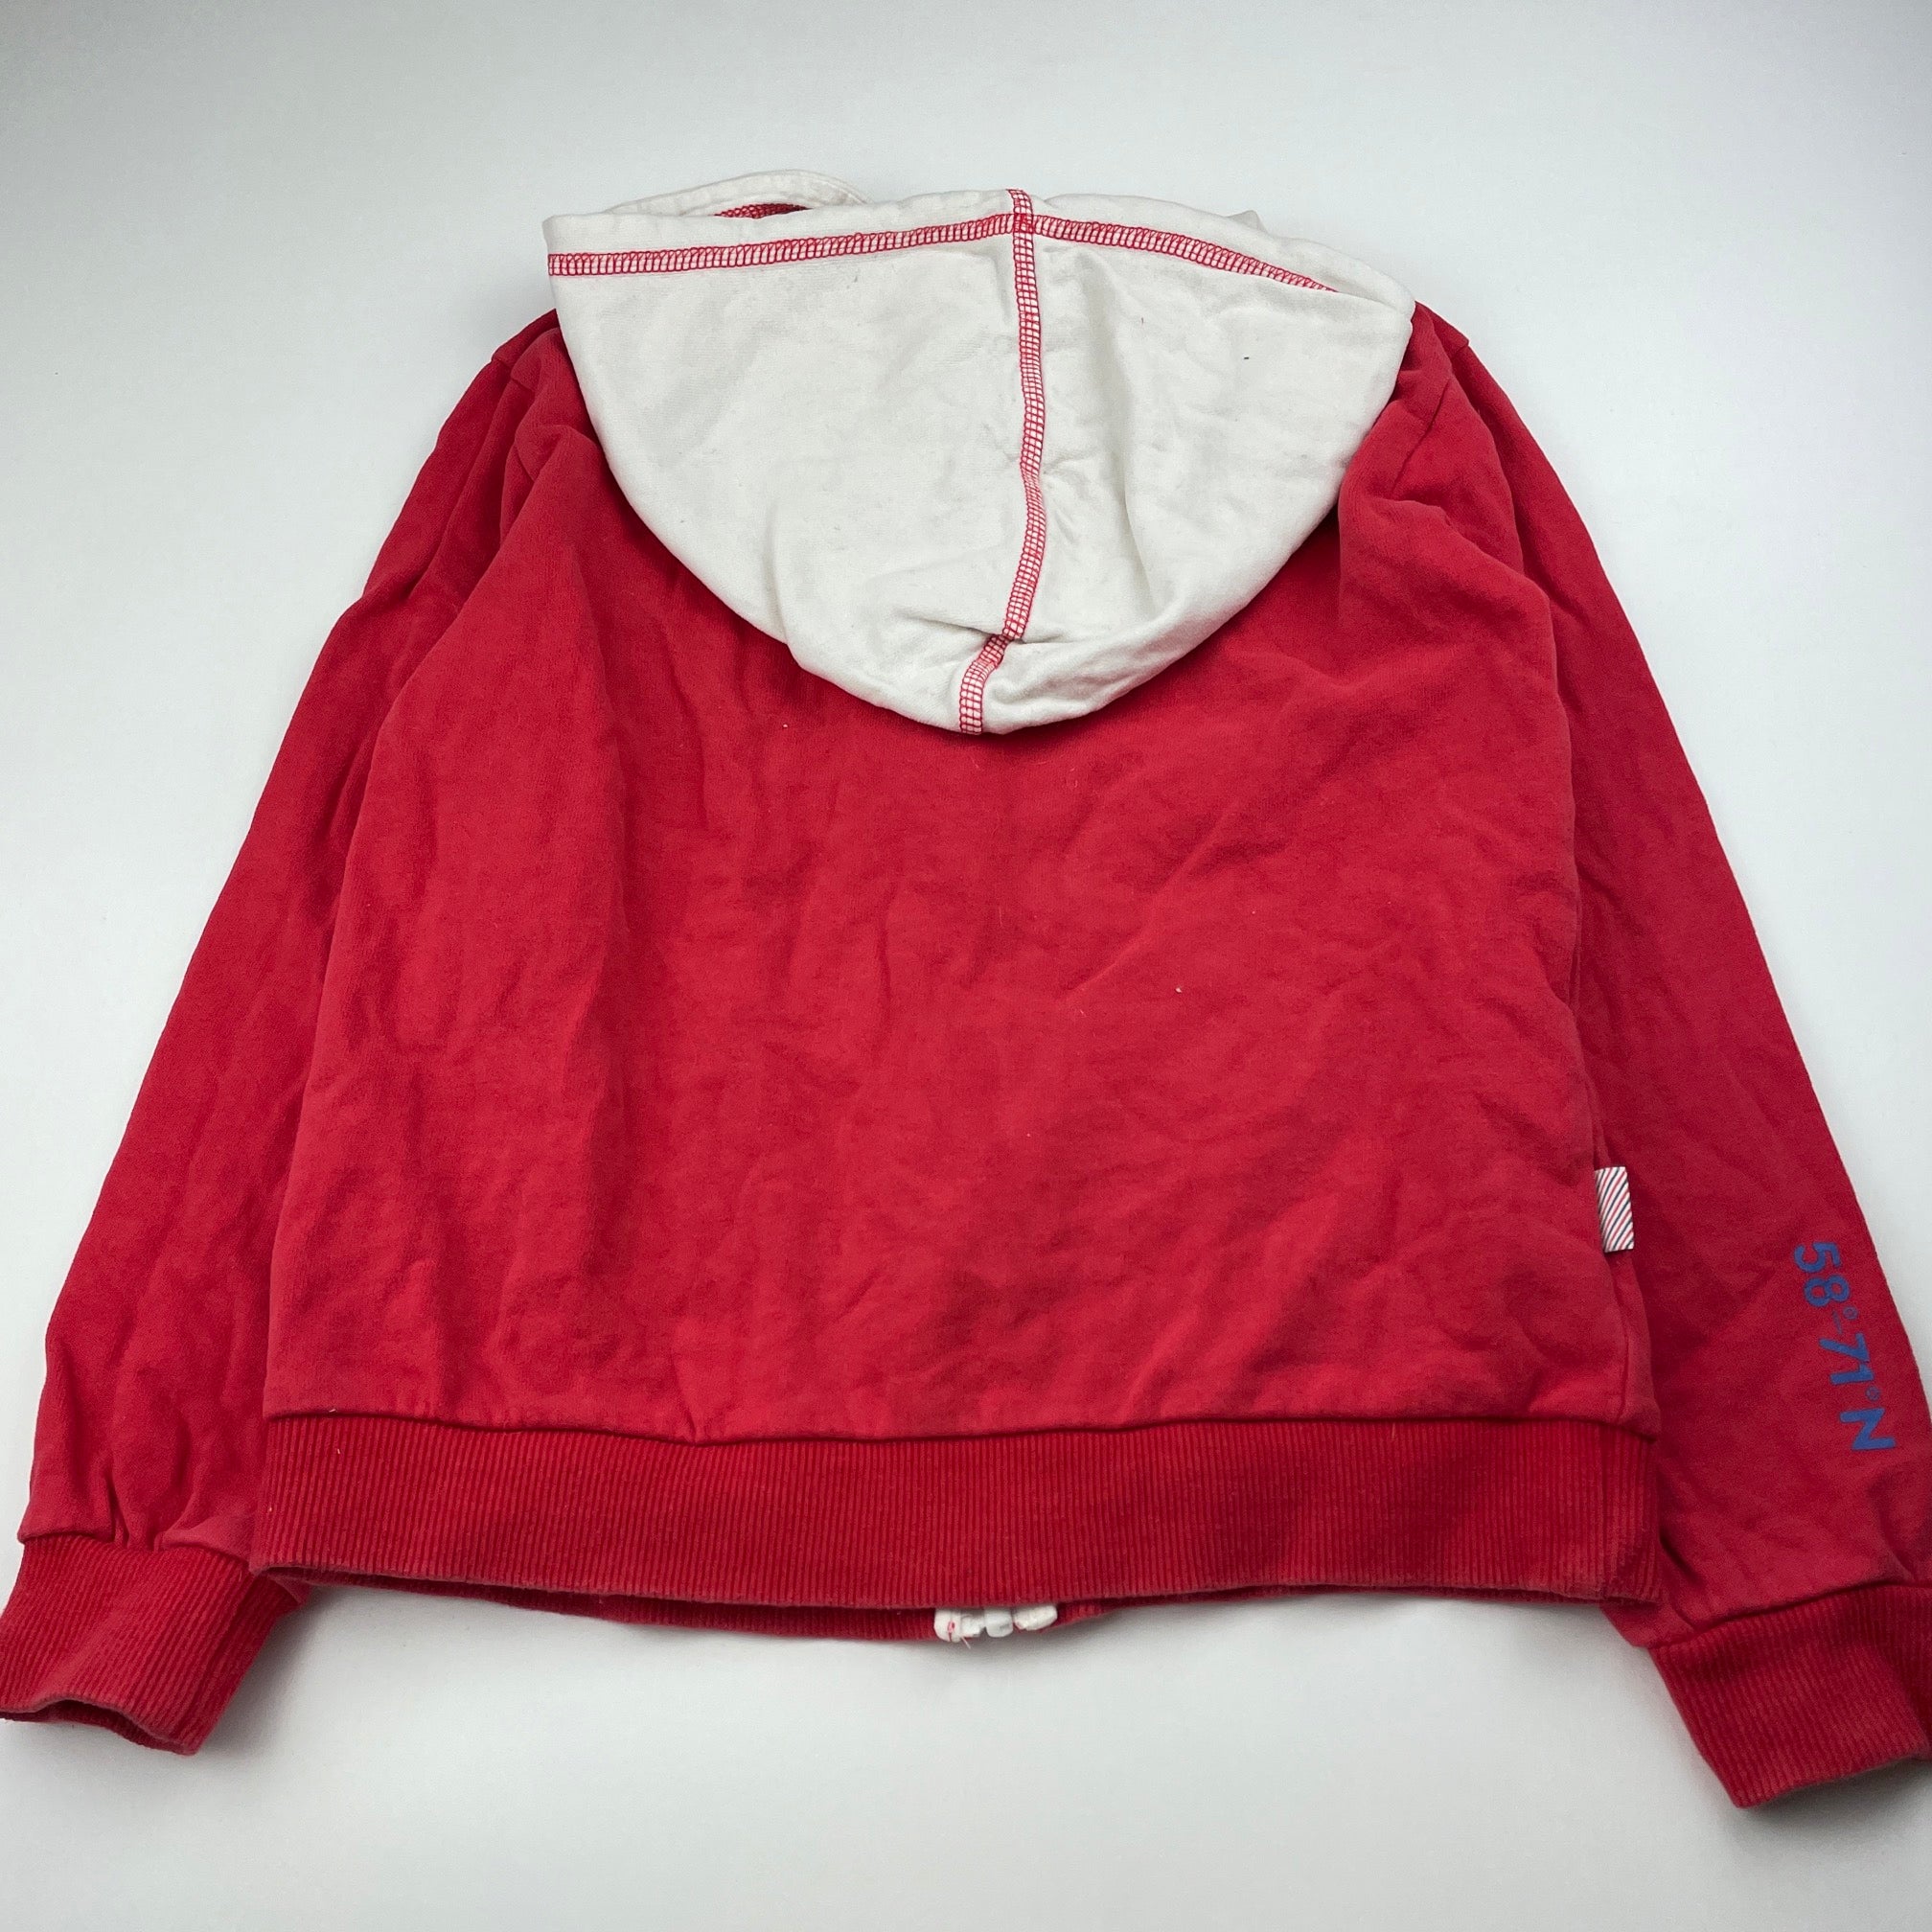 zip size Norway, FUC, hoodie DaisyChainClothing 8-10, North Worn, white cotton – red & sweater,